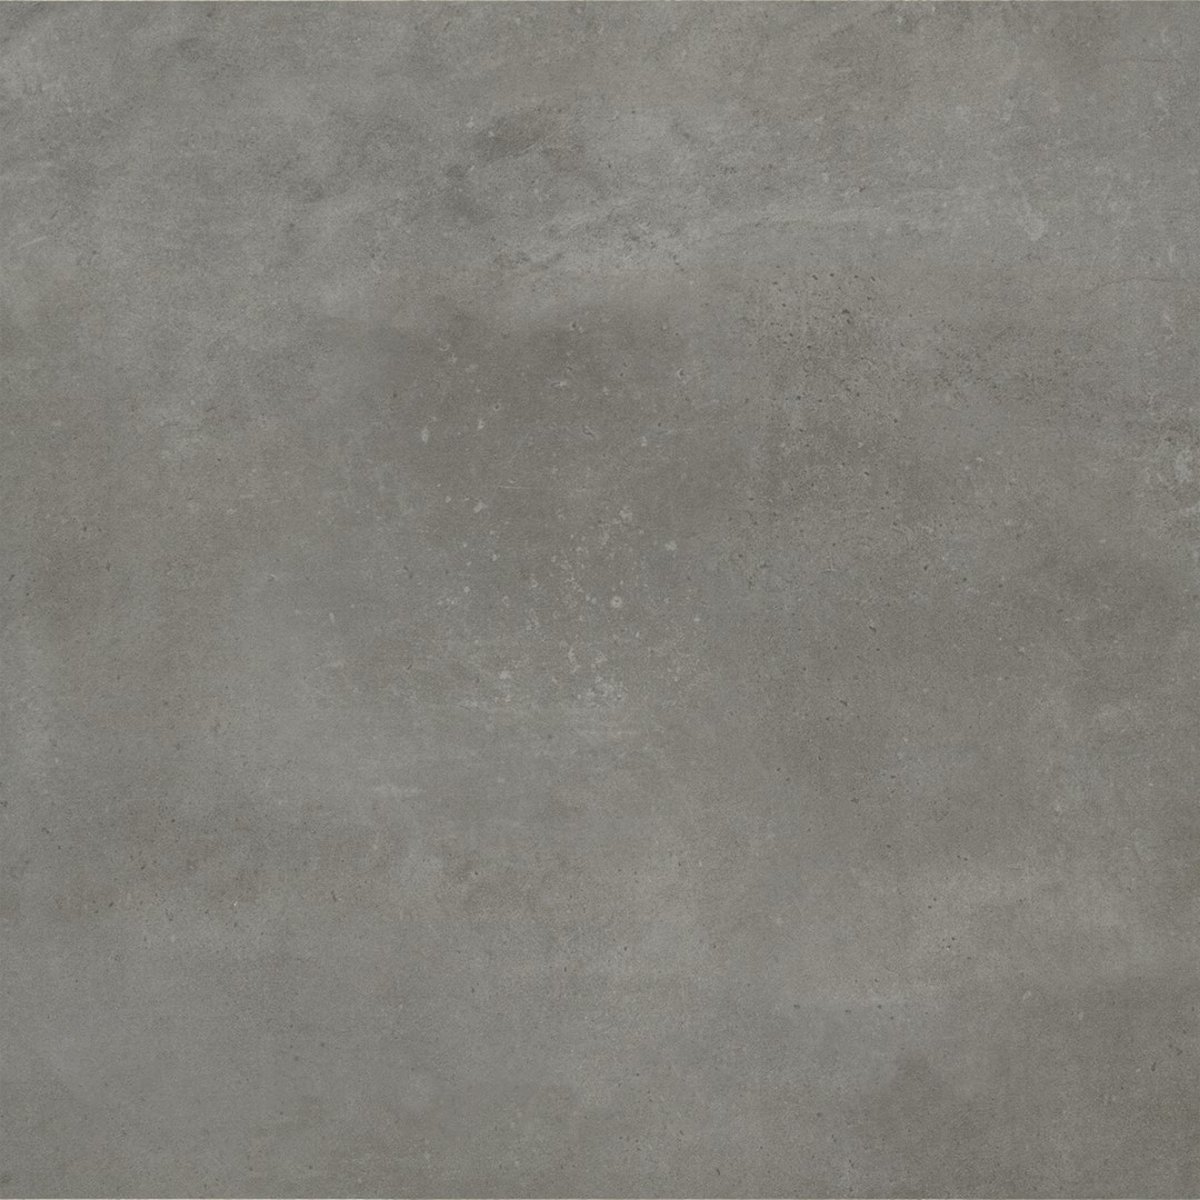 Bologna Dark Grey keramische tegels cera3line lux & dutch 90x90x3 c...